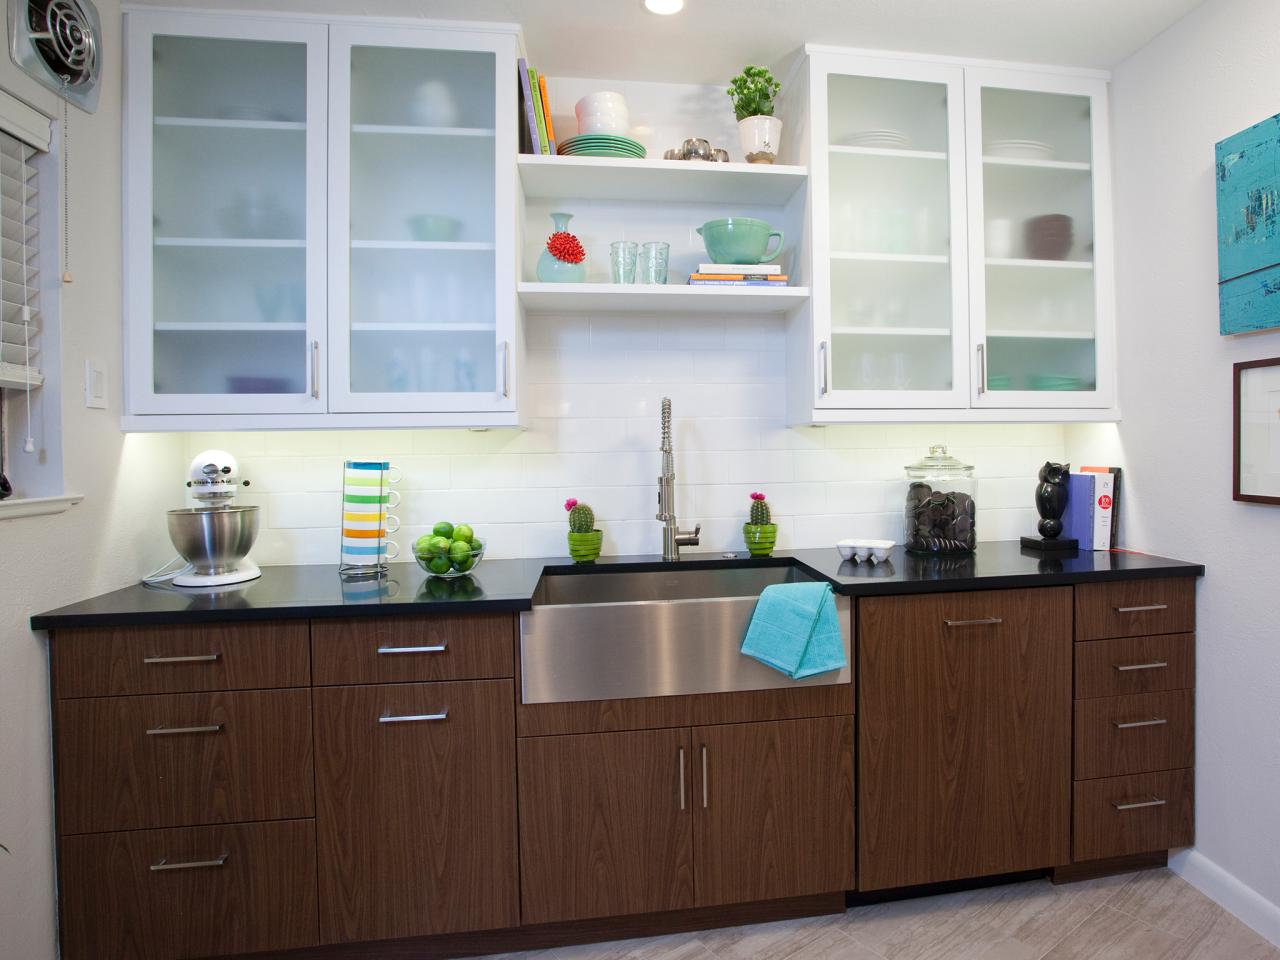 Kitchen Cabinet Design Pictures Ideas Tips From HGTV HGTV